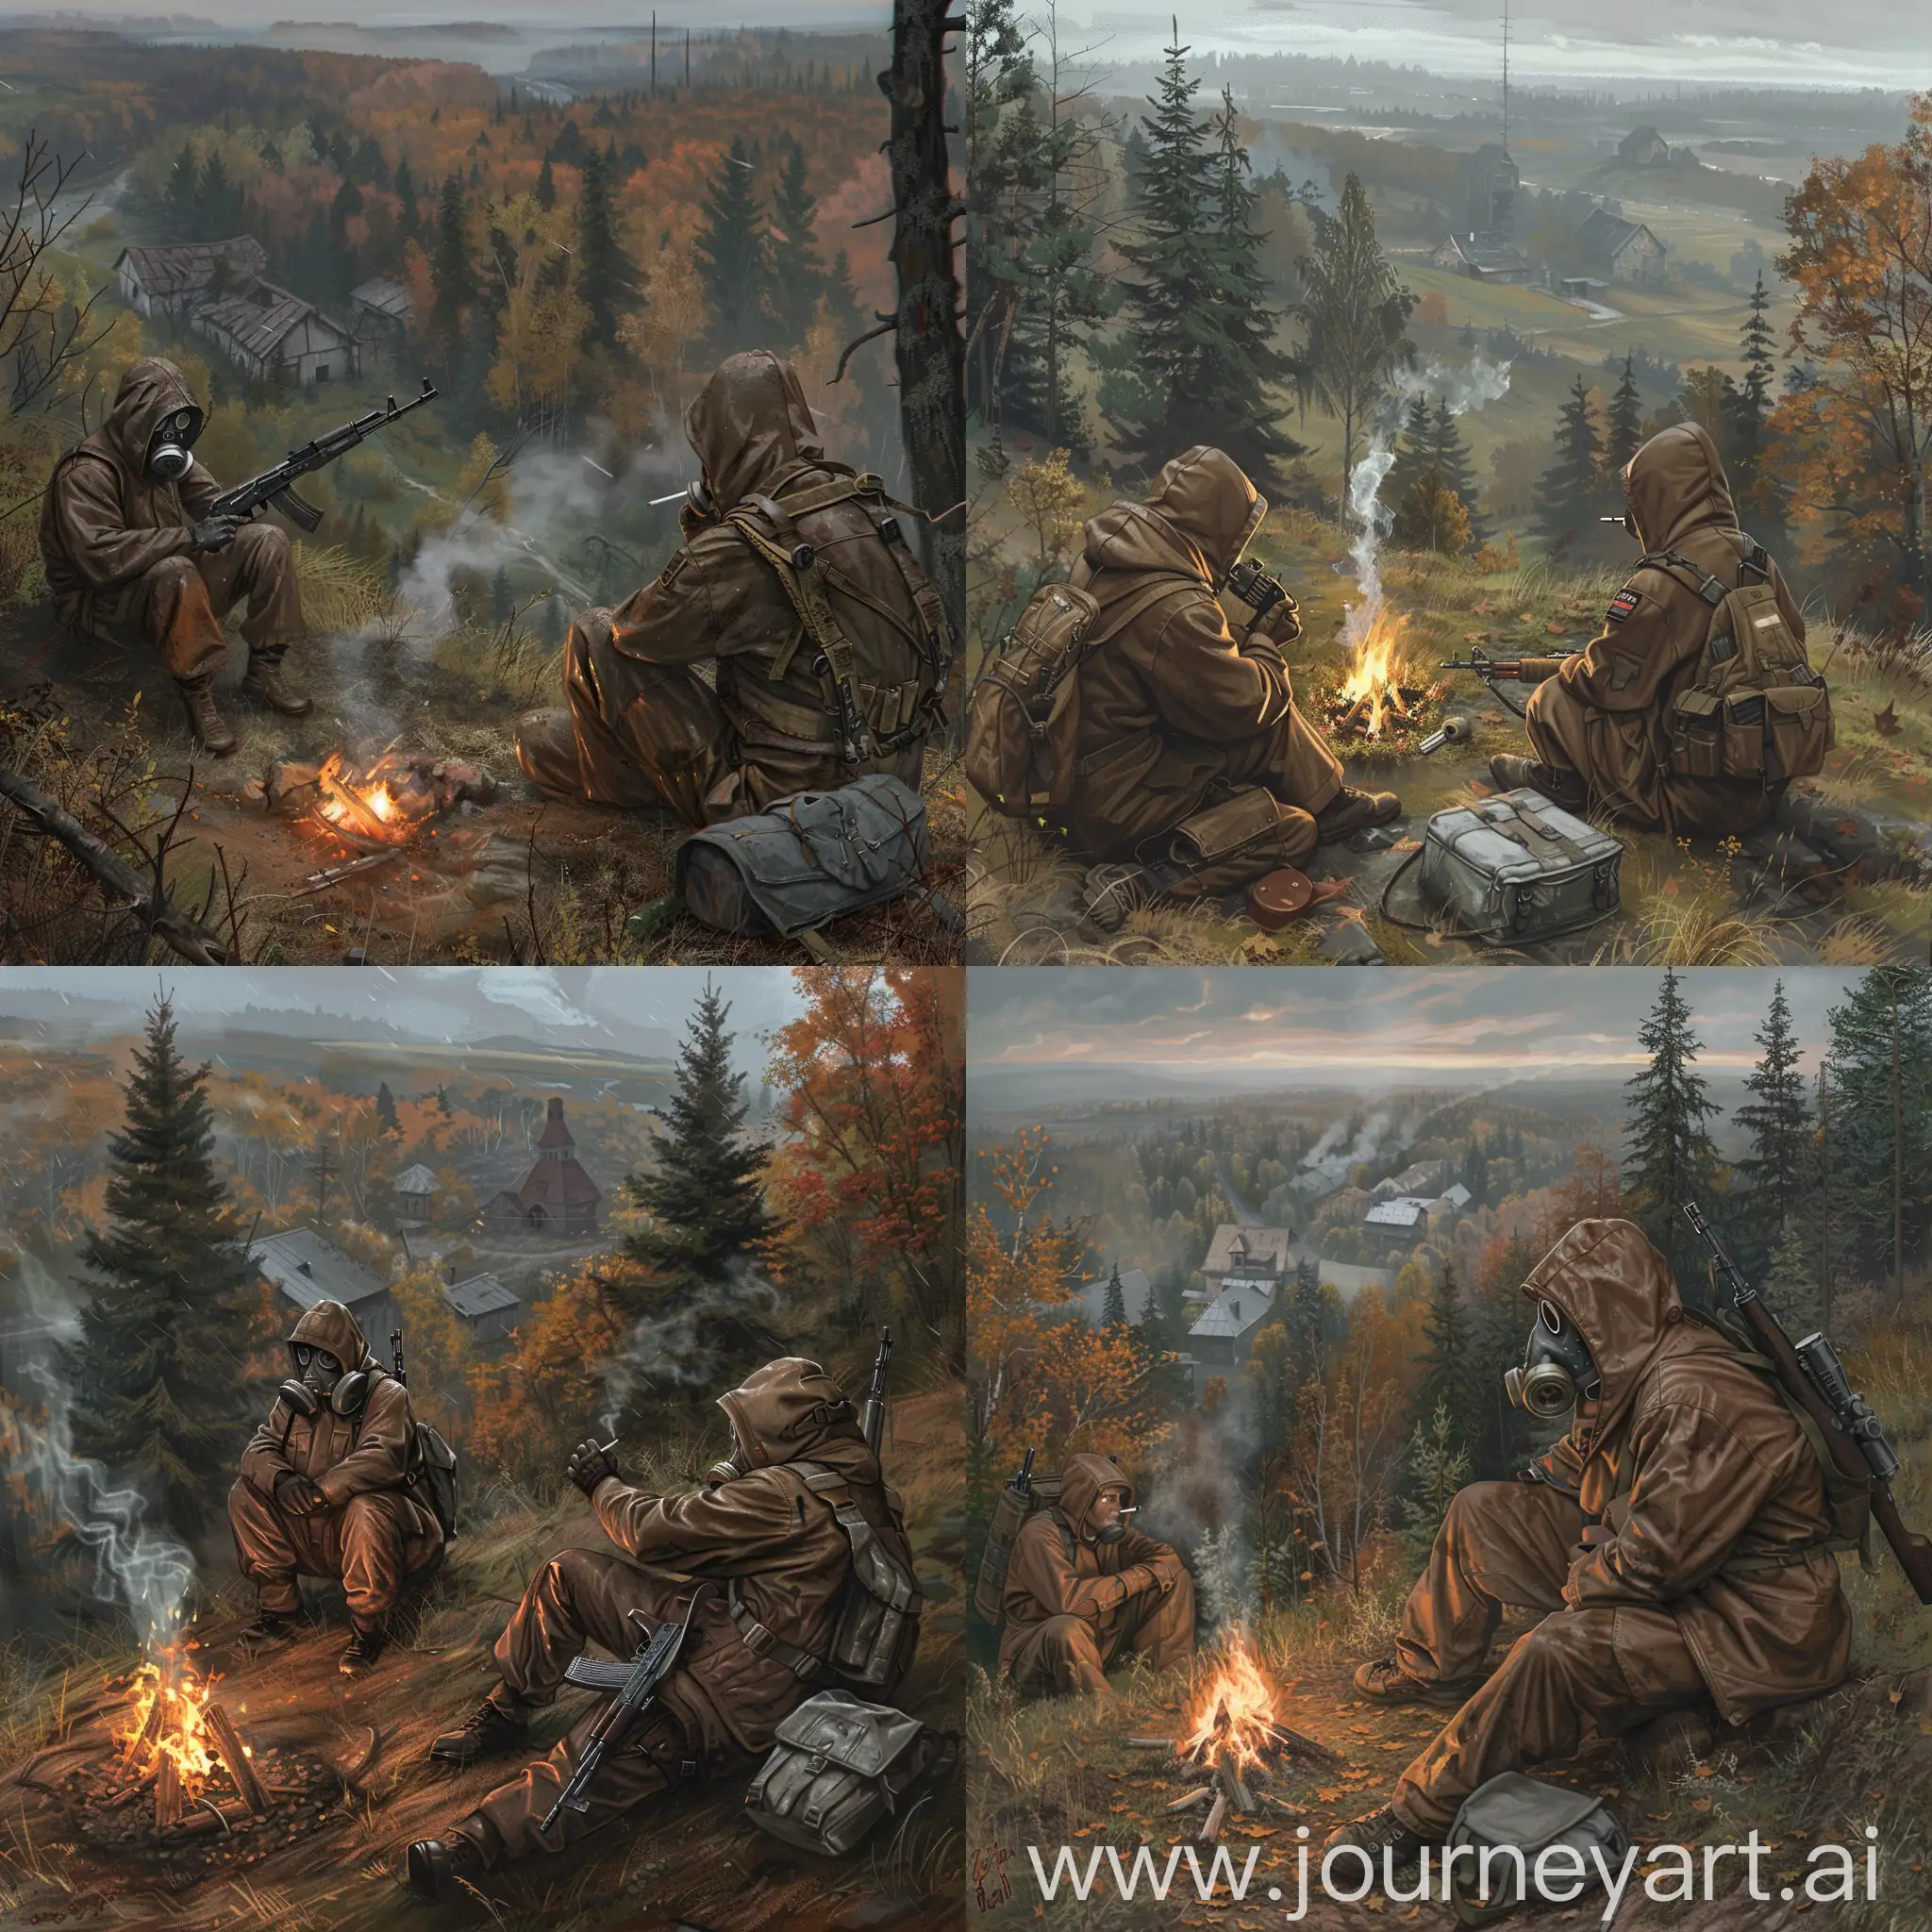 Stalker-Art-Two-Stalkers-by-Campfire-in-Gloomy-Autumn-Landscape